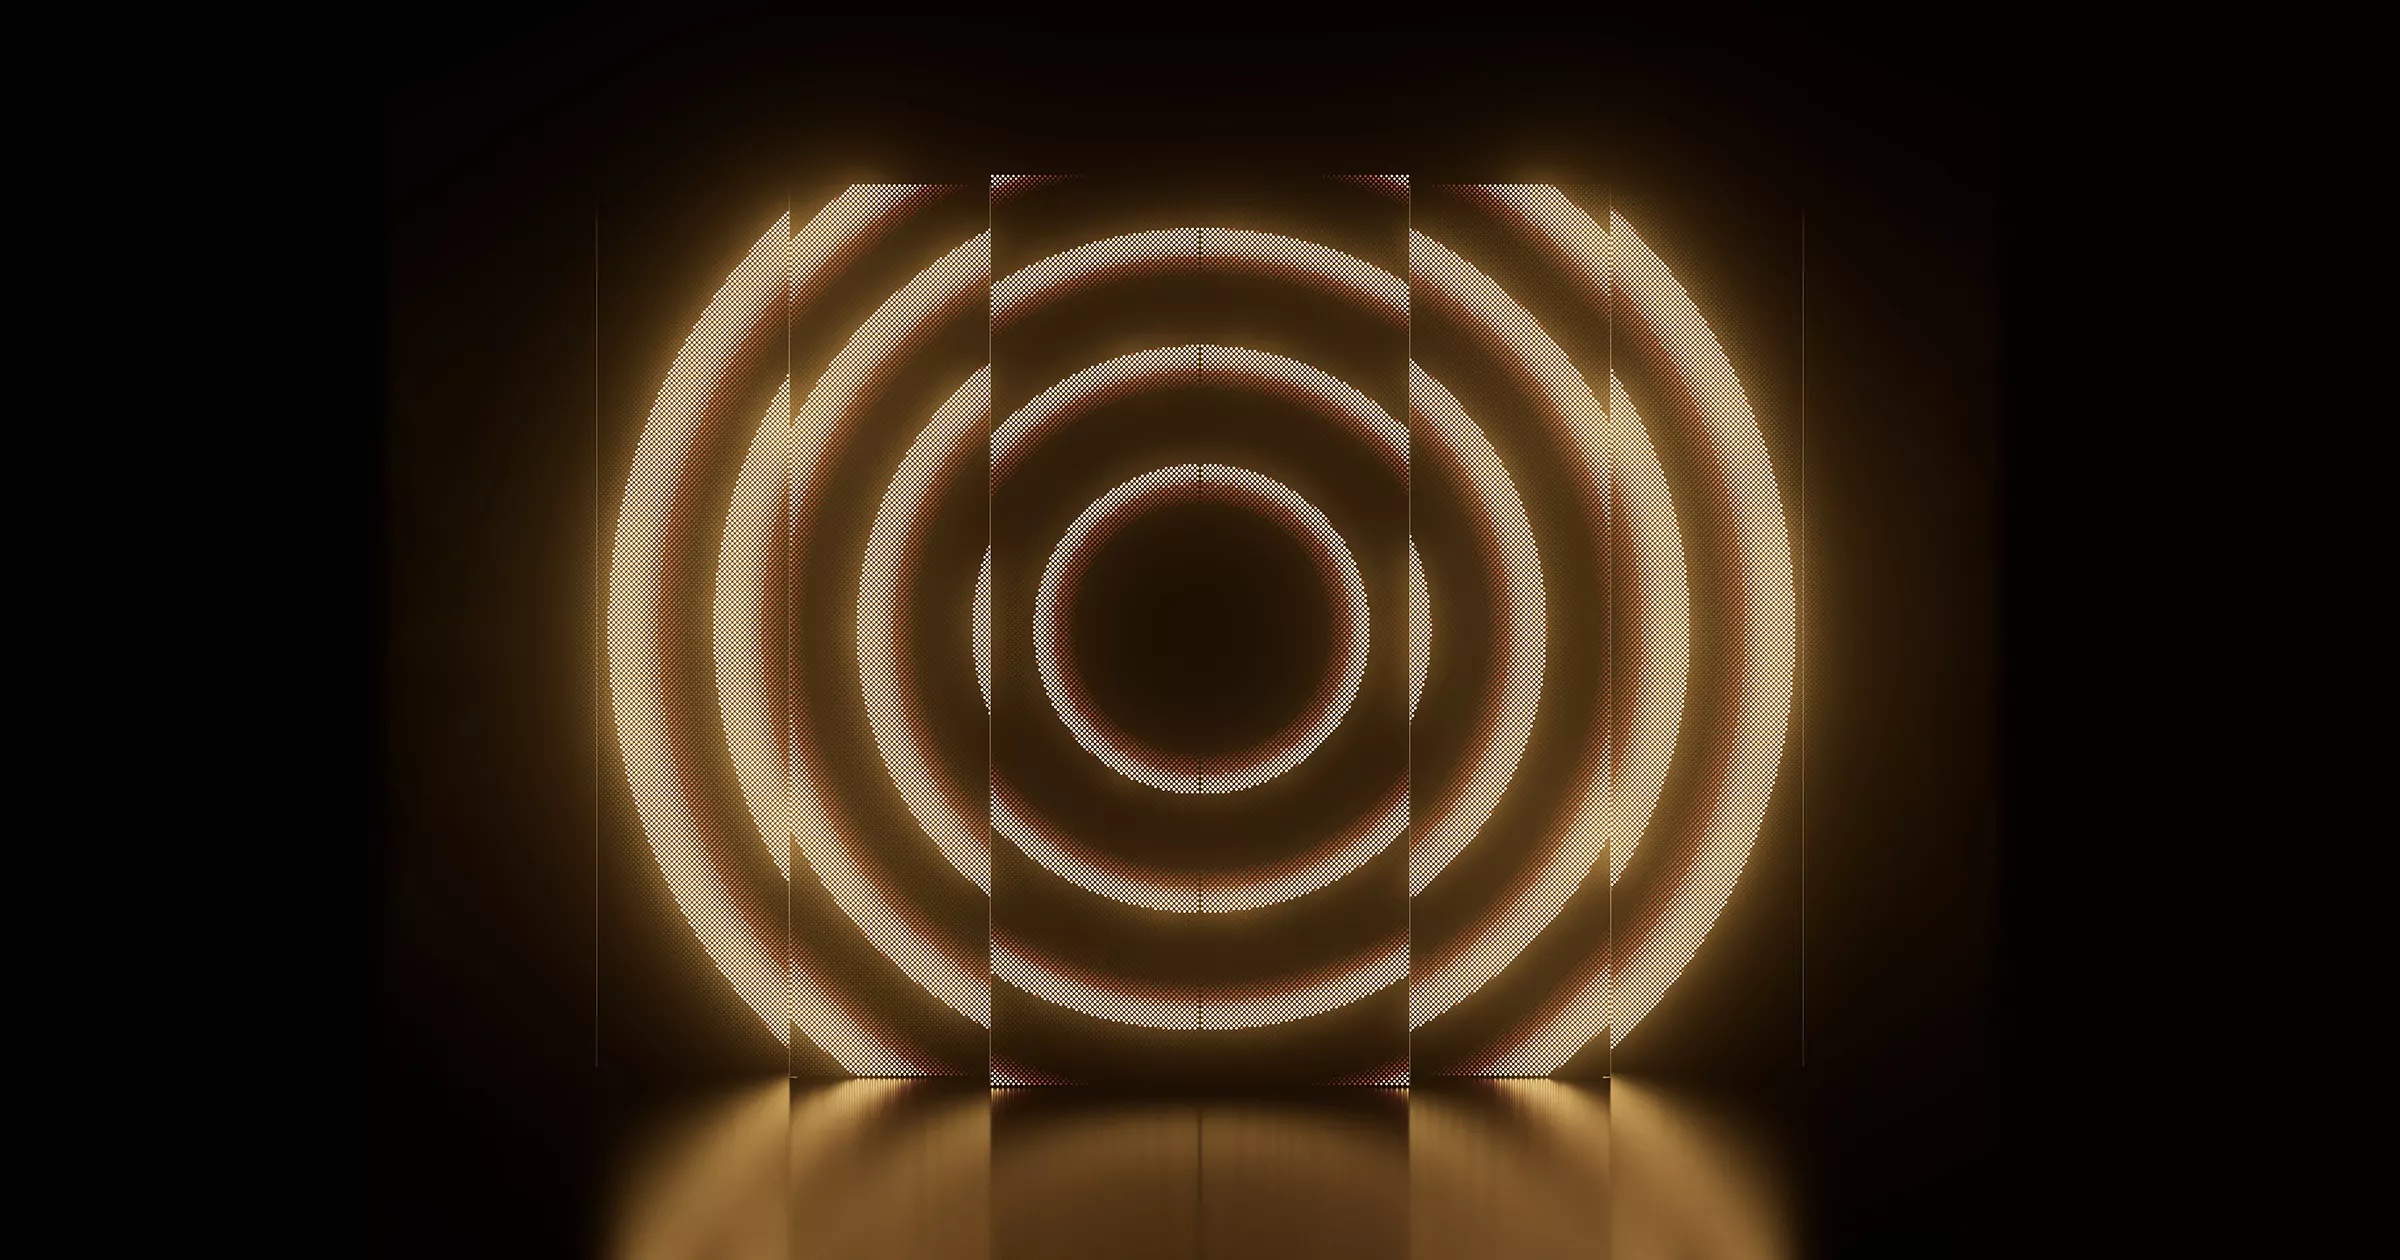 digital display of concentric circles